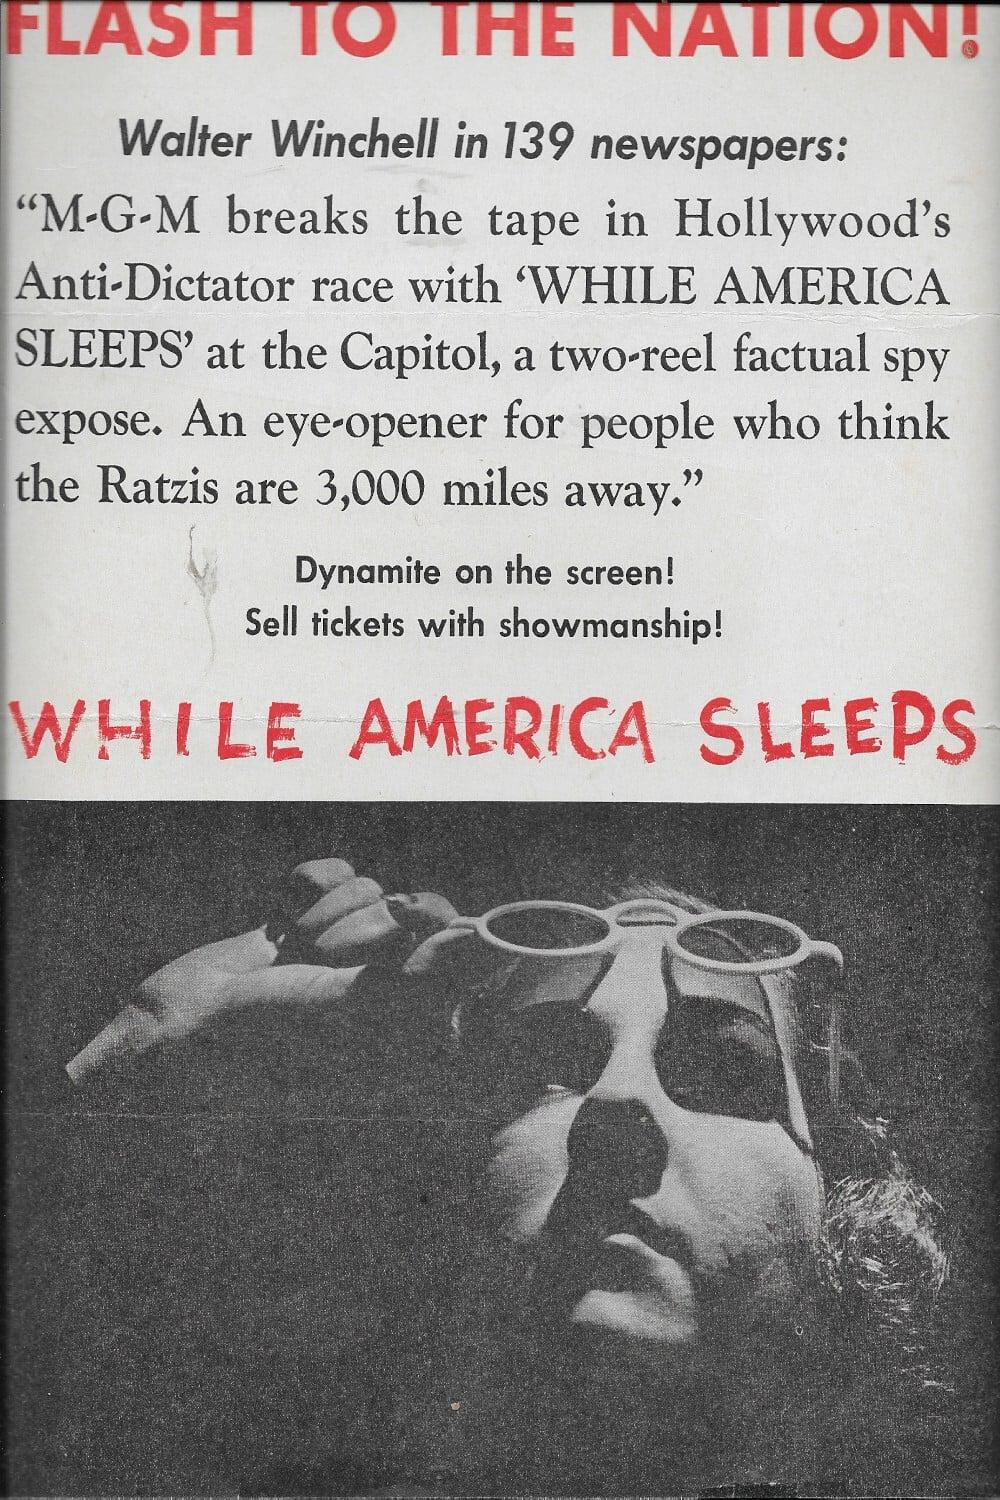 While America Sleeps poster